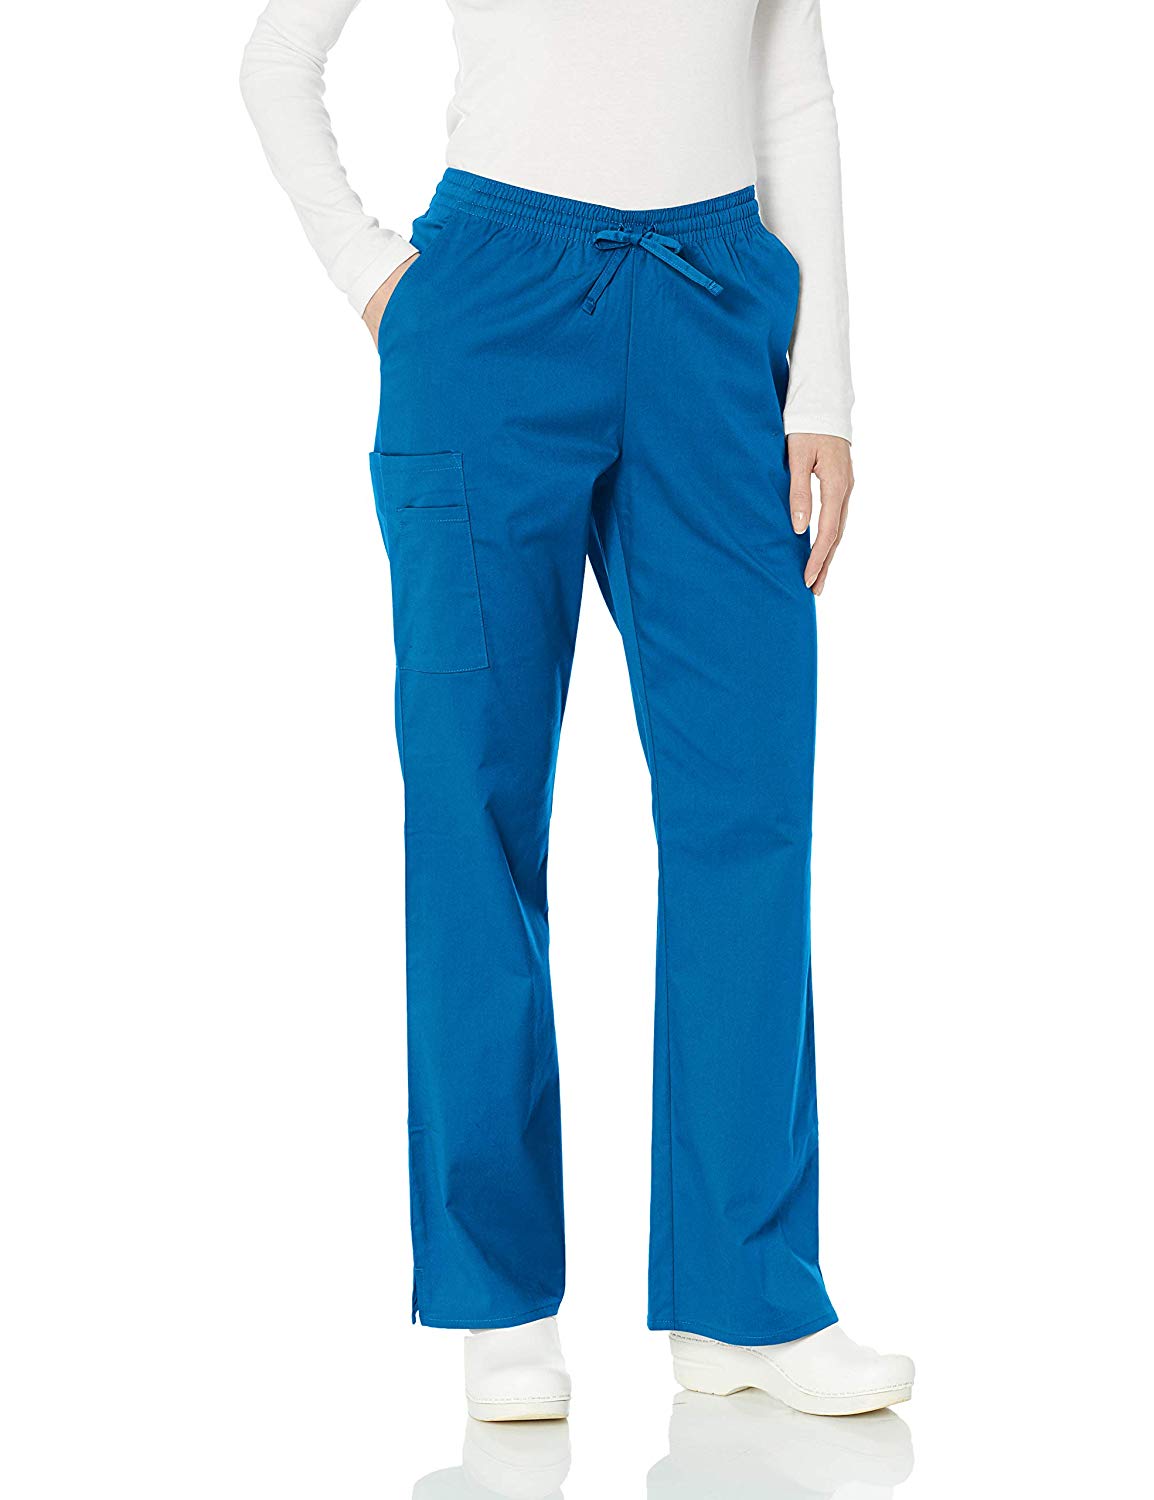 Essentials Women's Quick-Dry Stretch Scrub Pant,, Galaxy Blue, Size ...